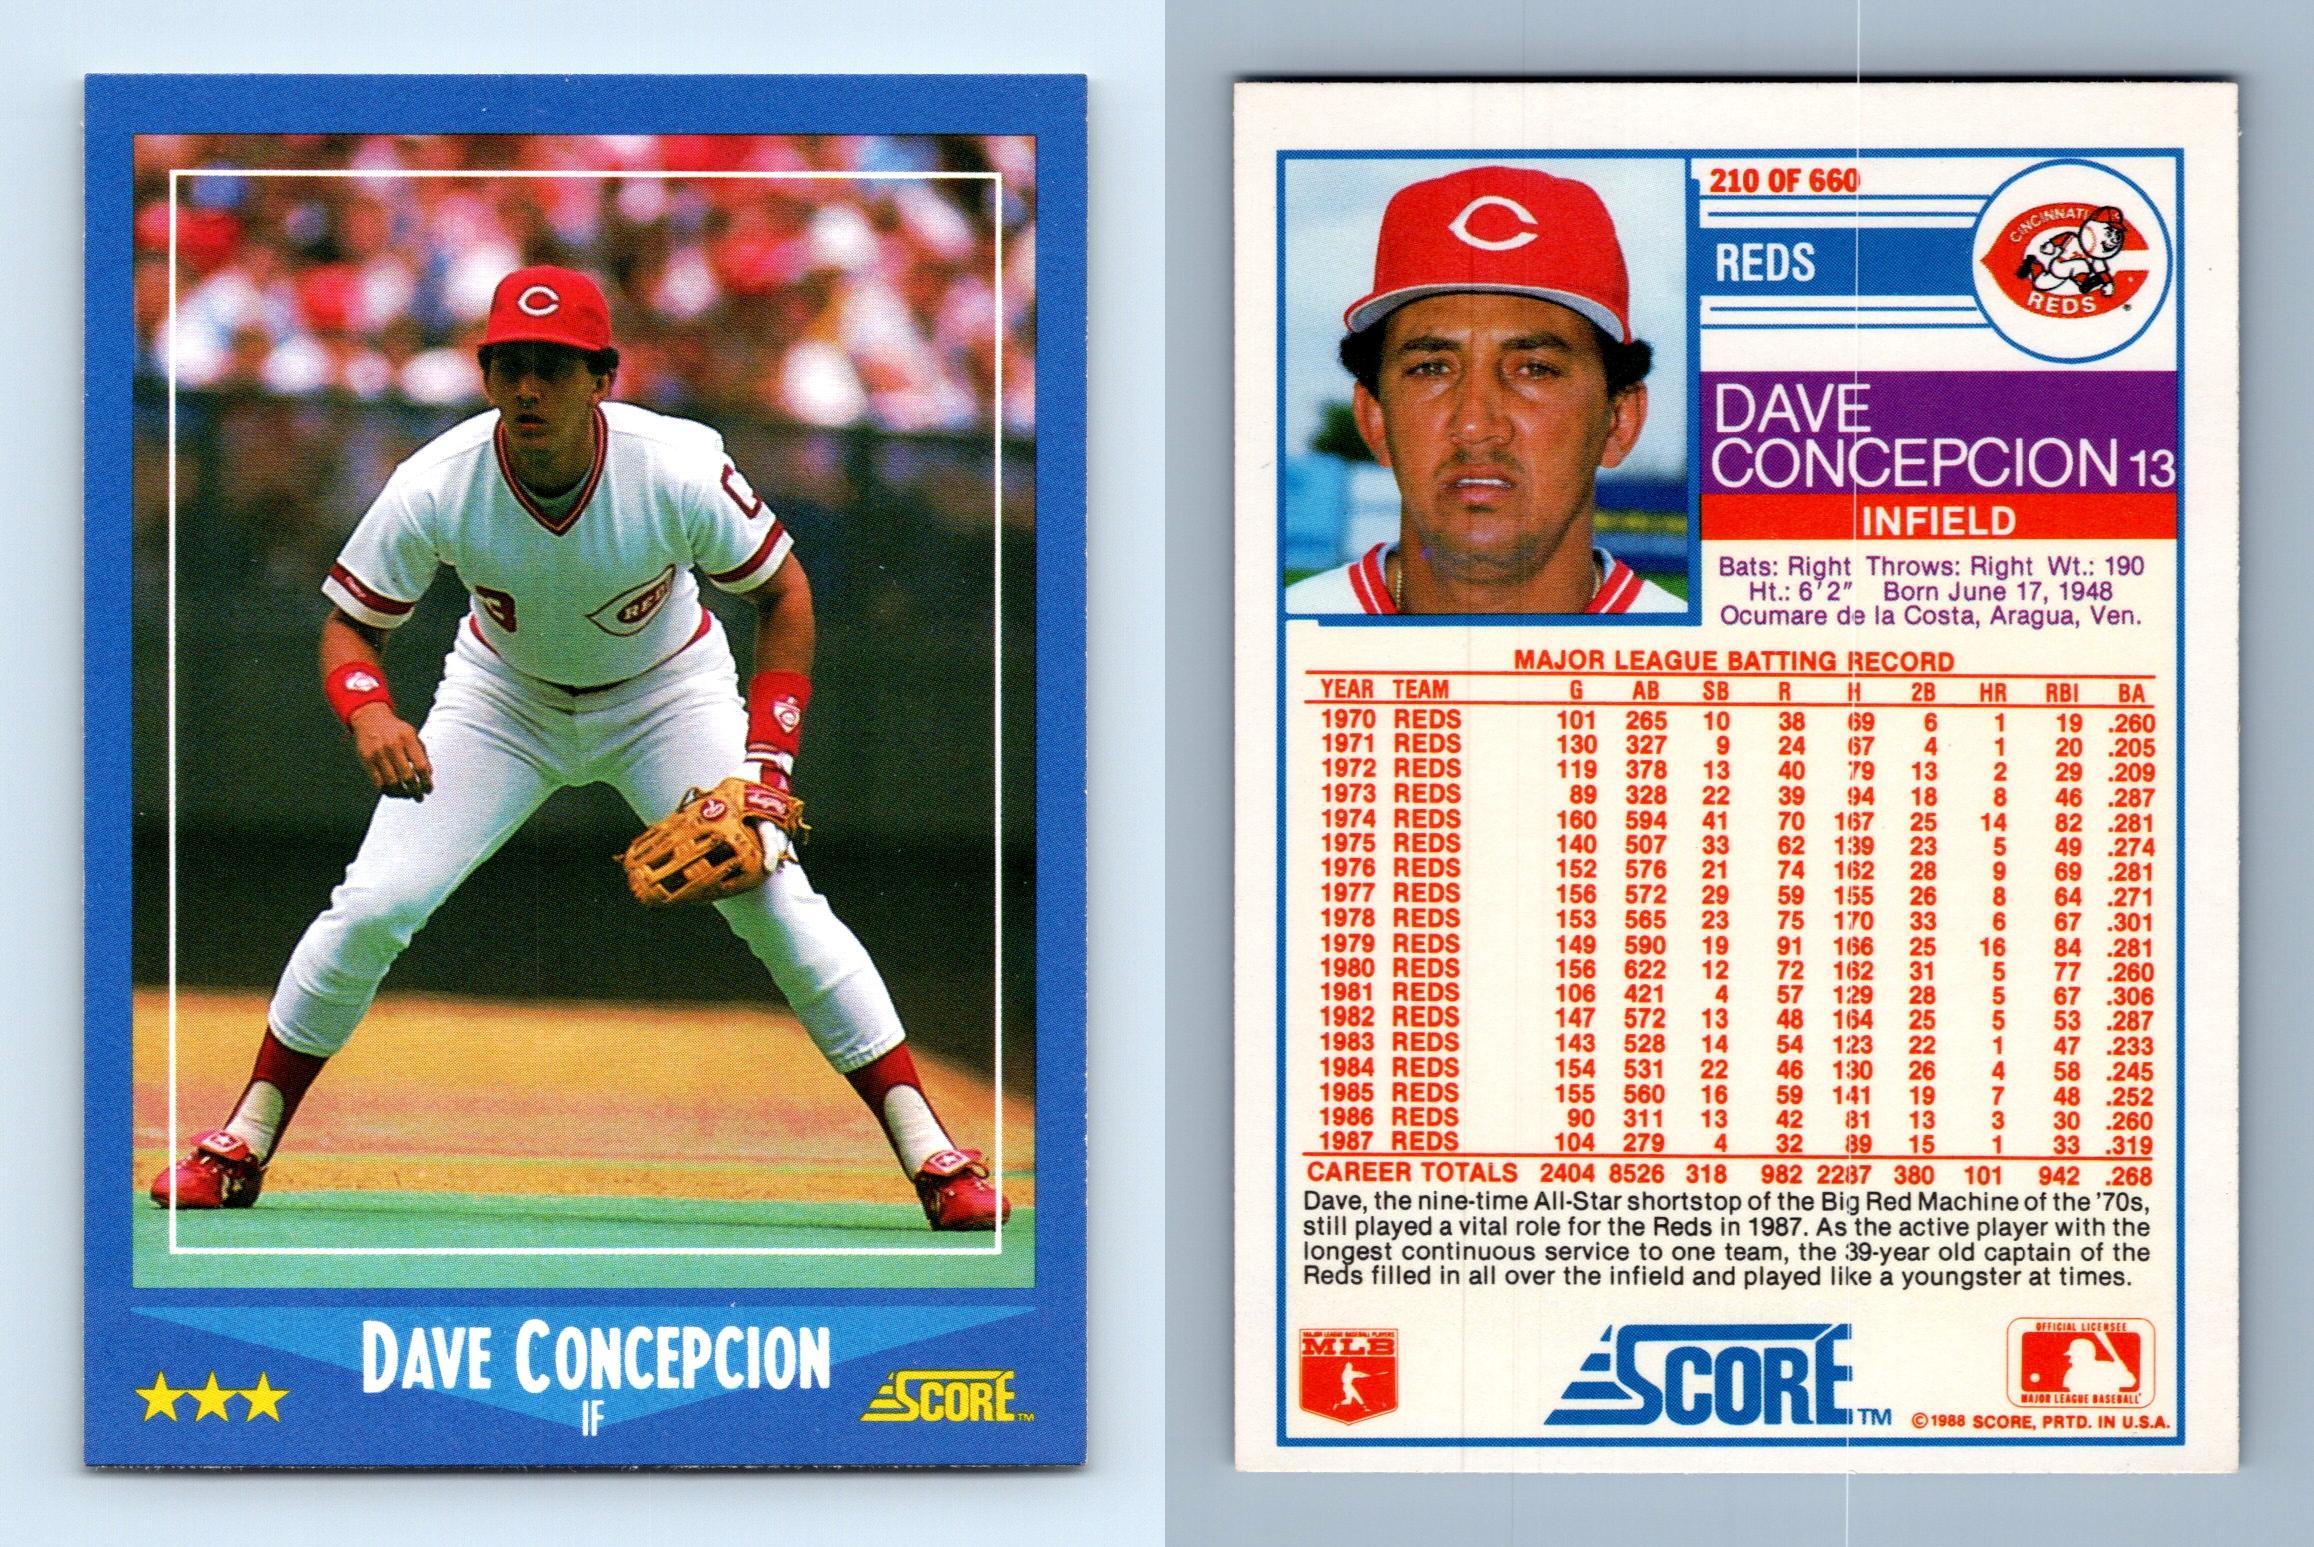 Dave Concepcion - Reds #210 Score 1988 Baseball Trading Card